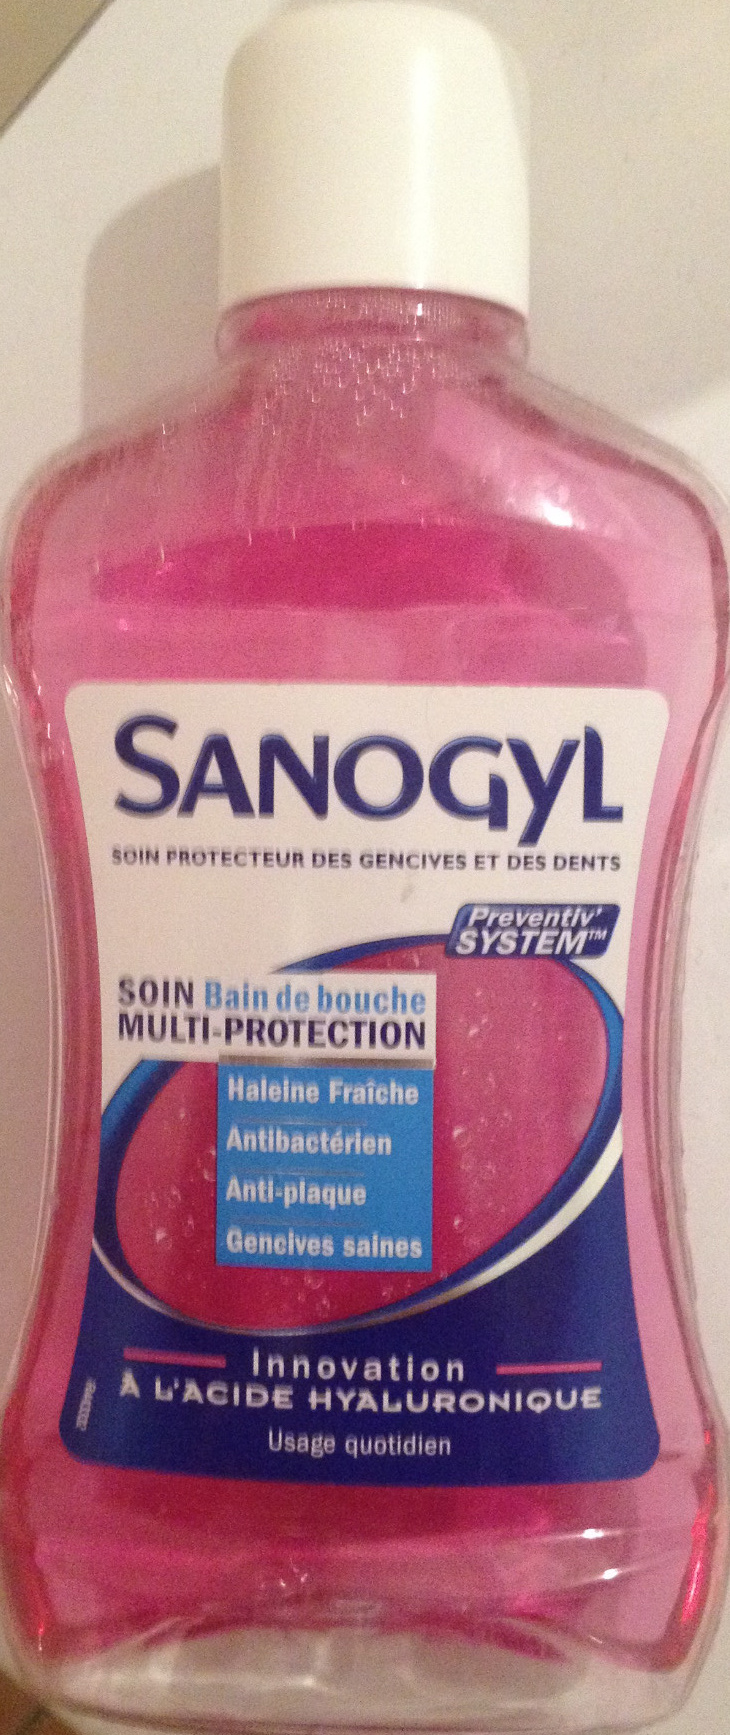 Soins Bain de bouche Multiprotection - 製品 - fr